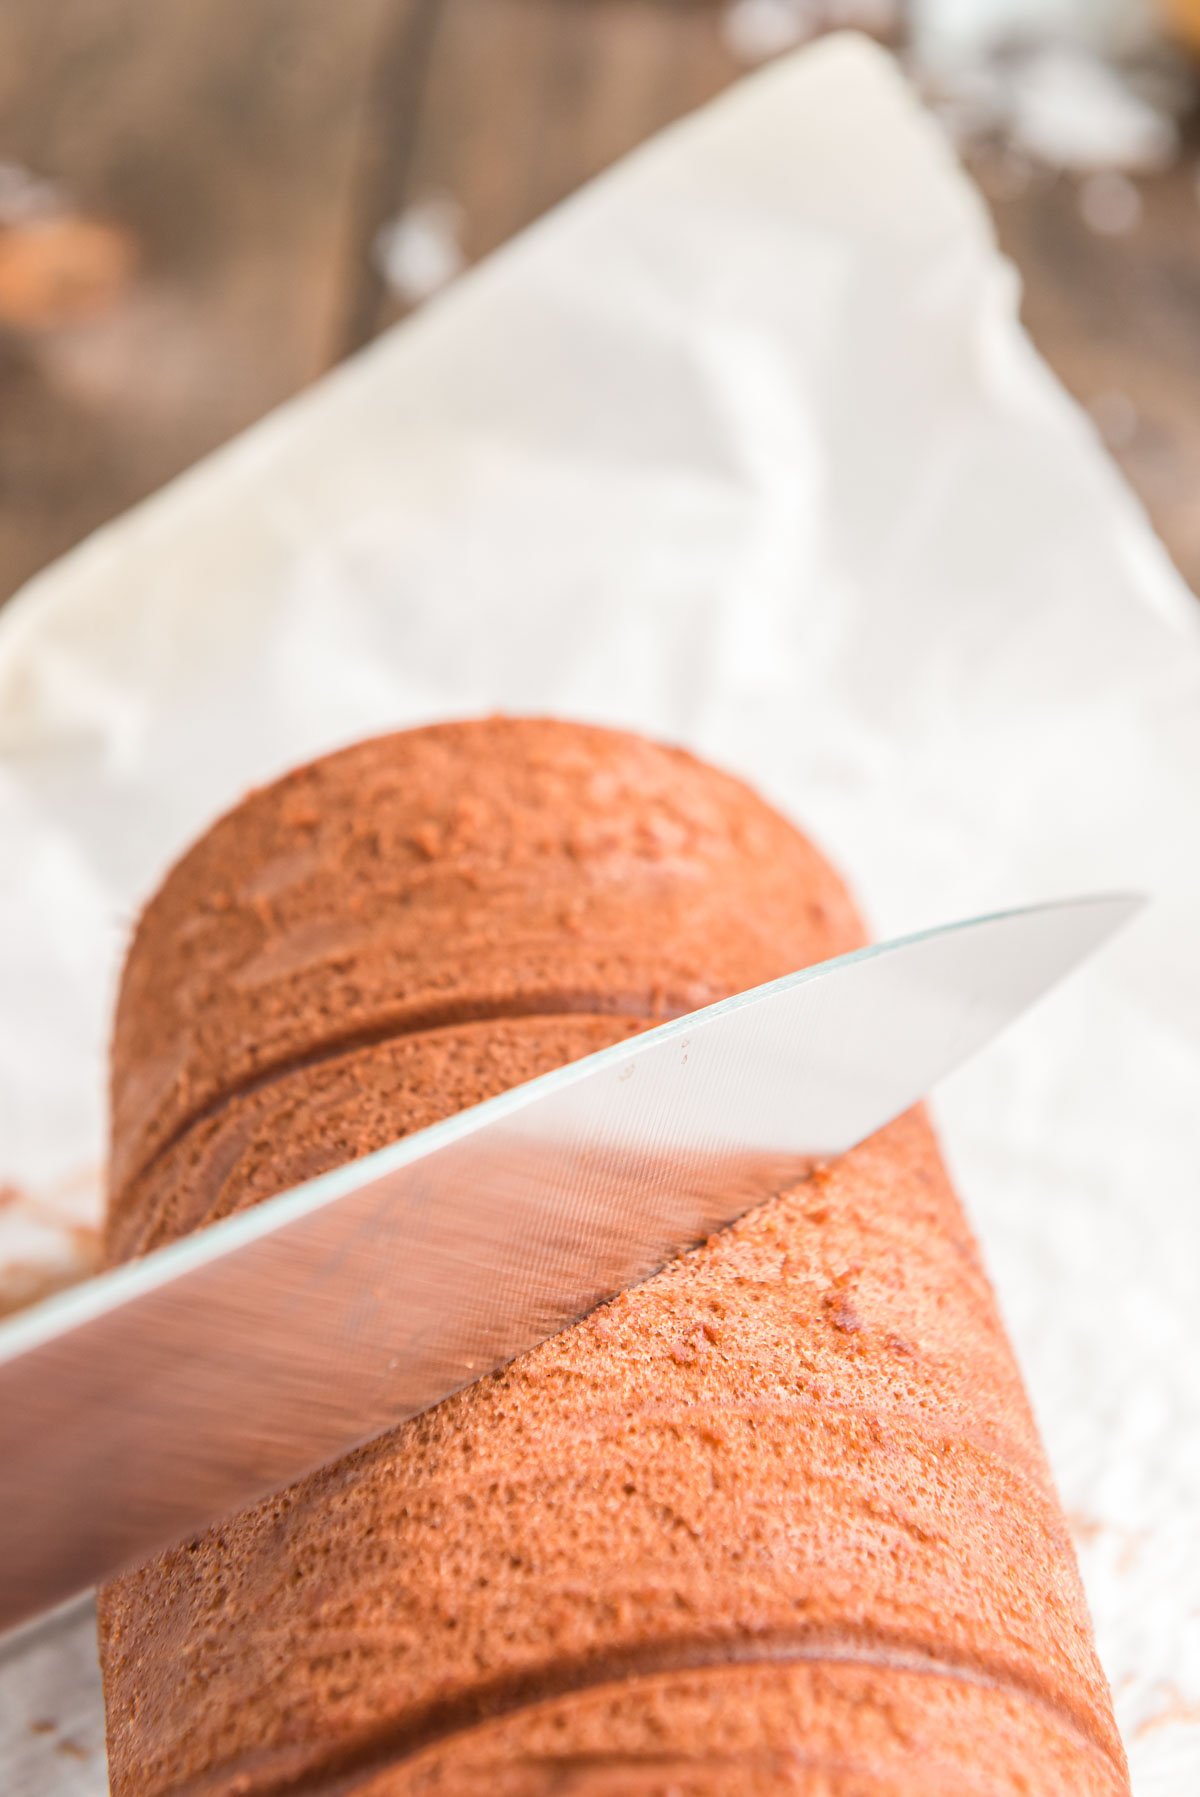 A knife cutting a diagonal slice in a chocolate cake roll for a buche de noel.